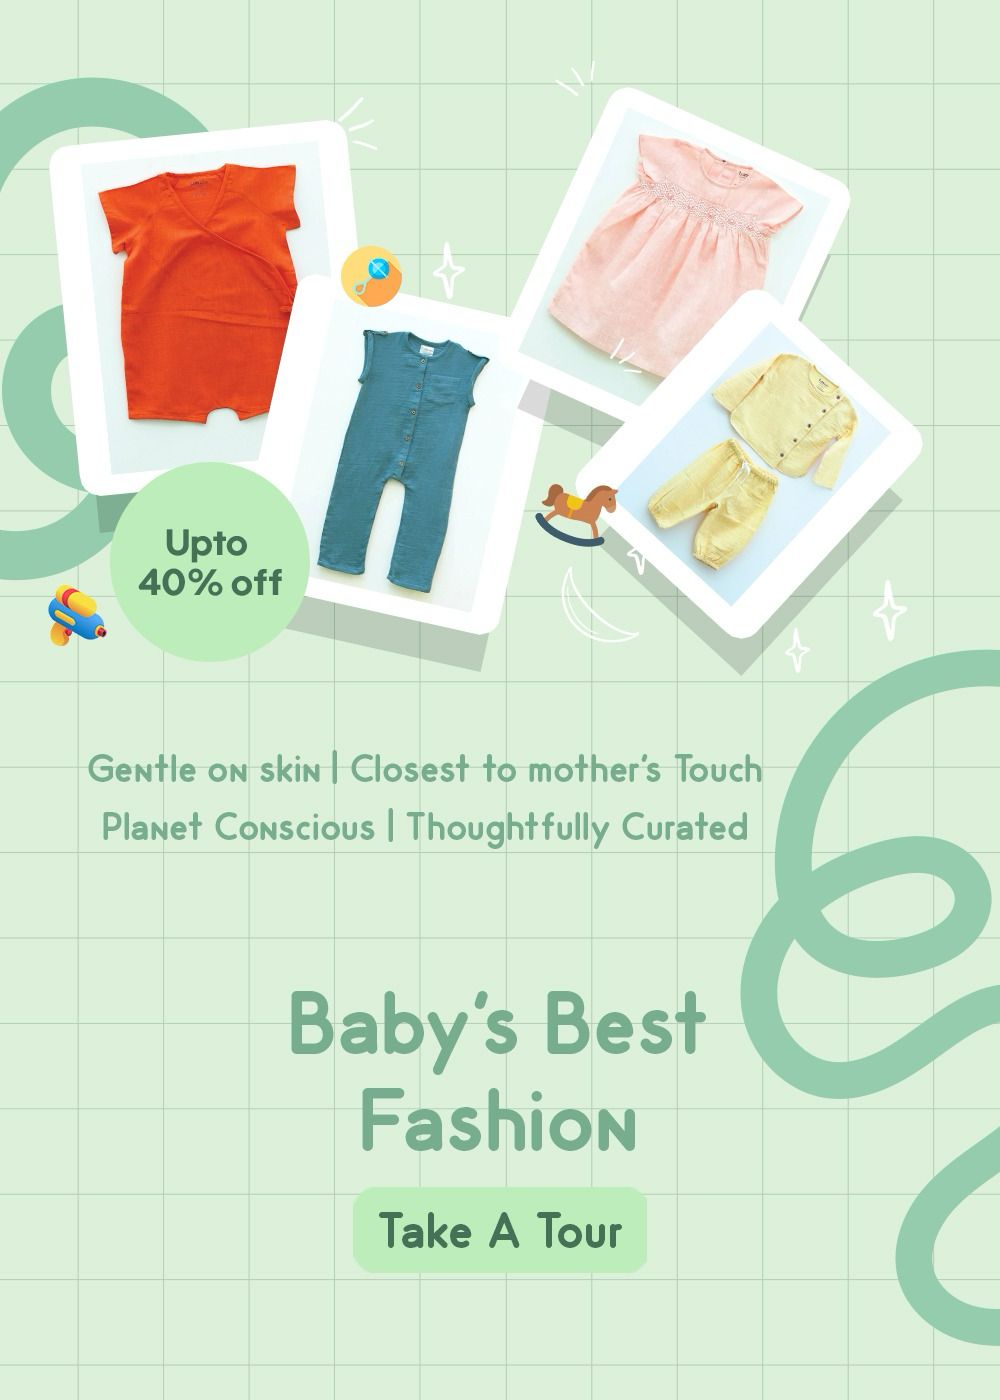 LITTLE ME Infant Boys Baby Bodysuit and Pants Set - Short Sleeve - Save 44%